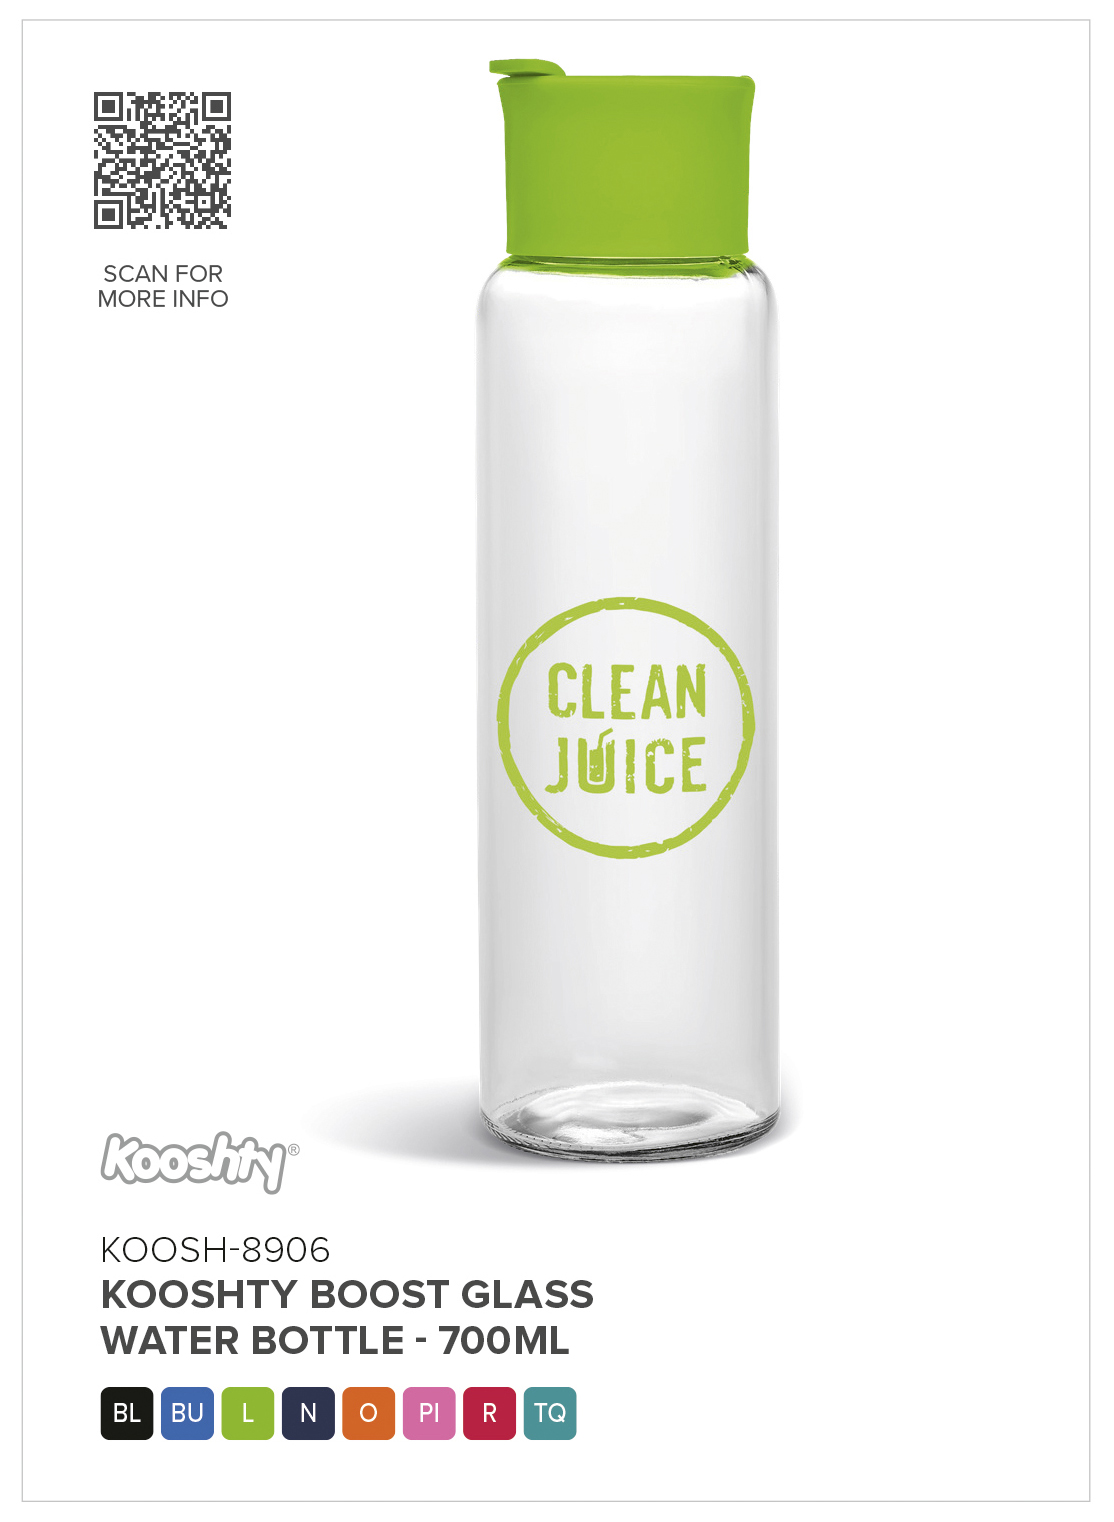 Kooshty Boost Glass Water Bottle - 700ml CATALOGUE_IMAGE